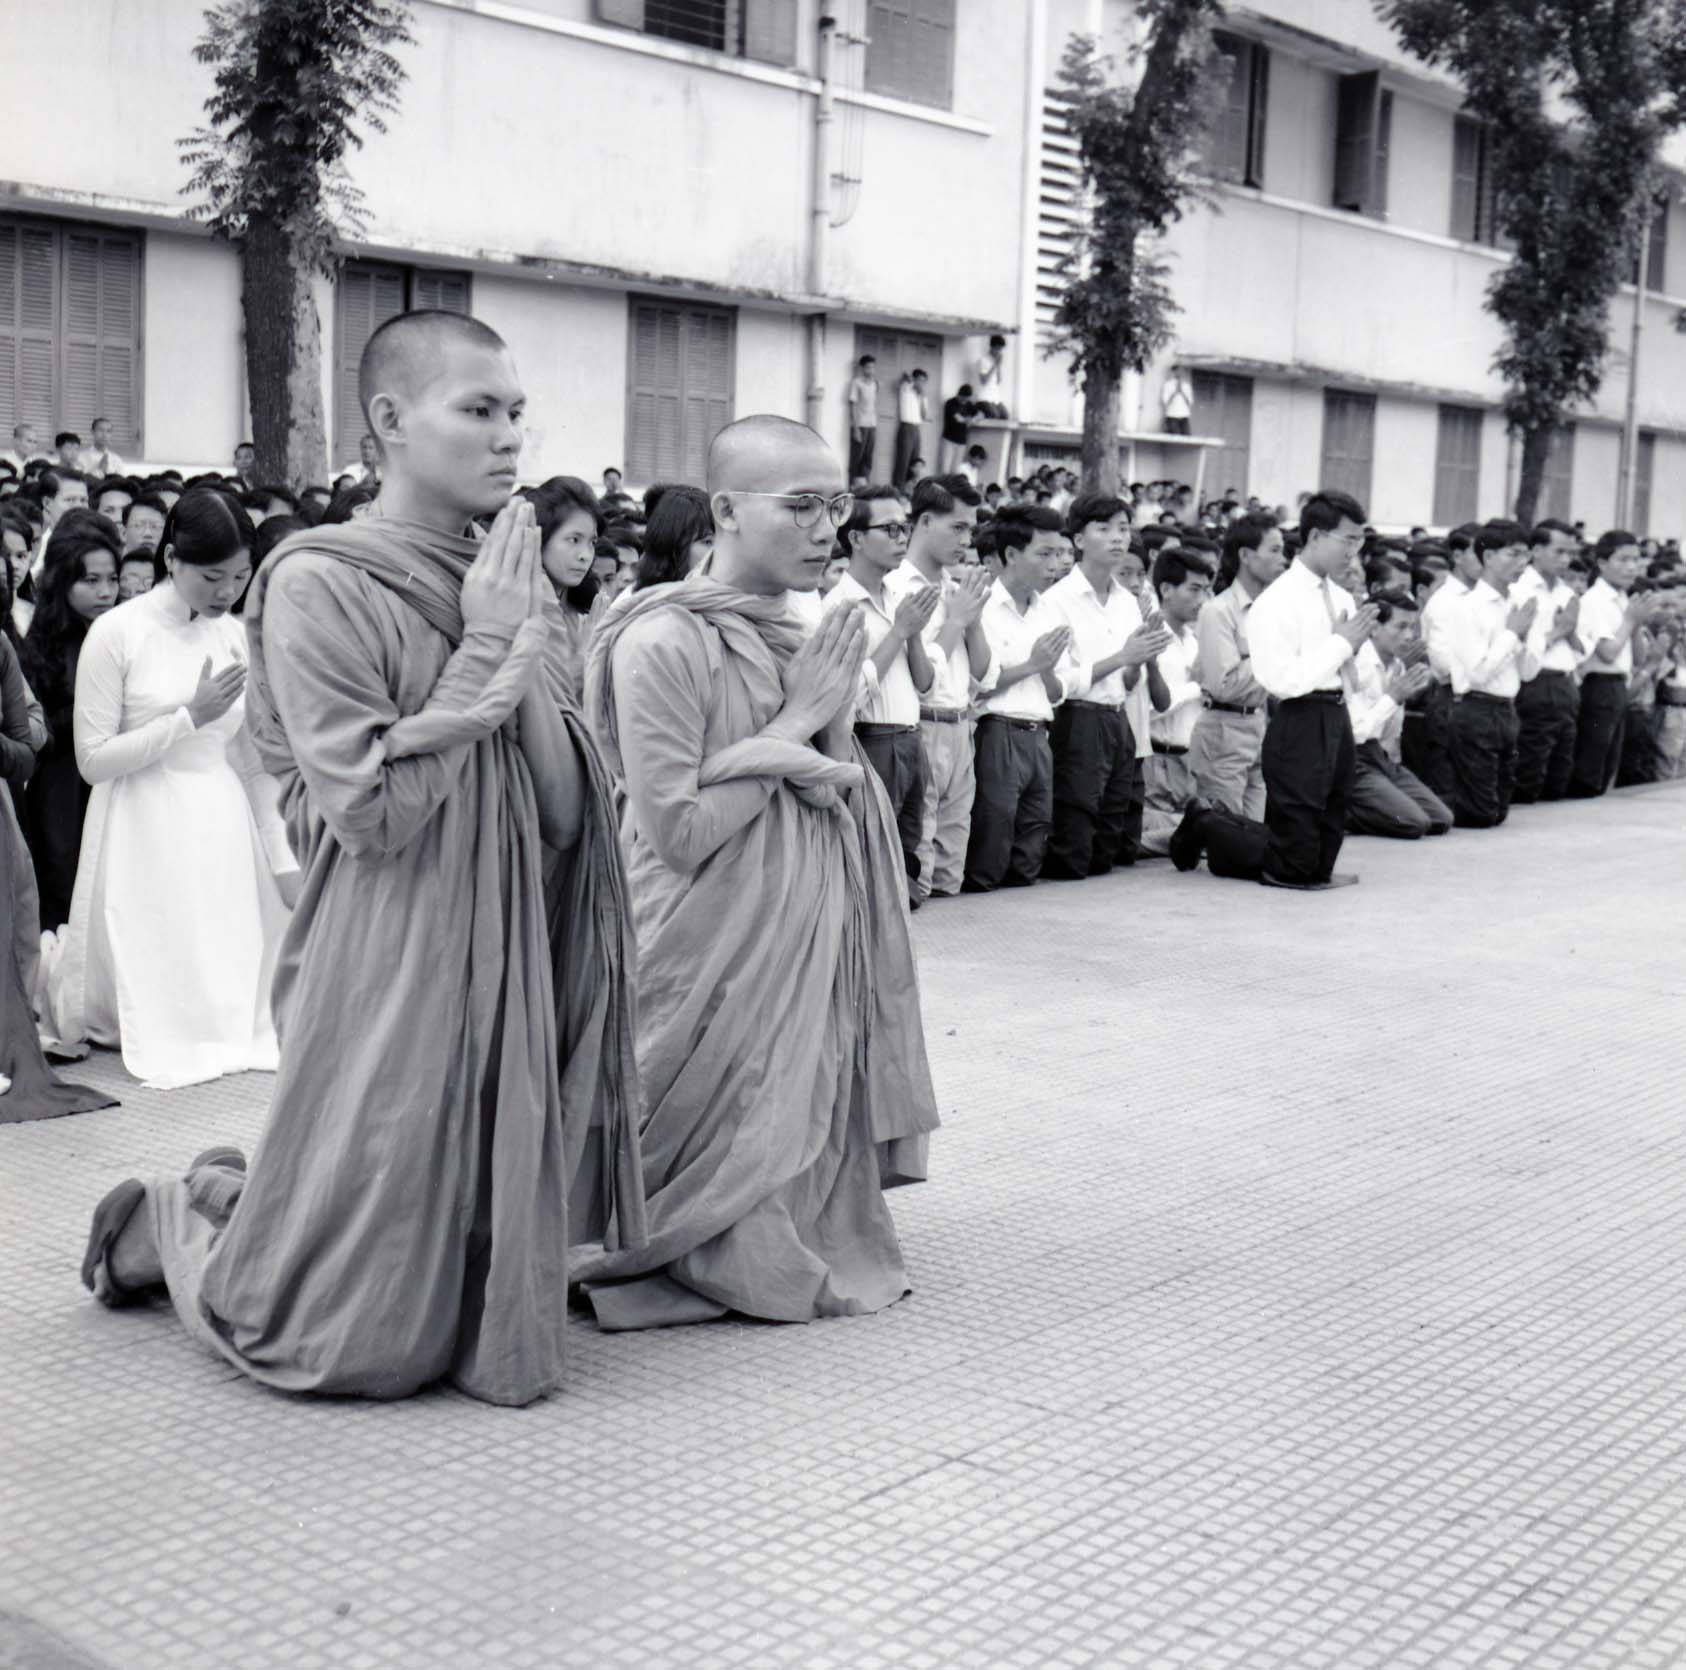 Buddhist monks praying, 1963